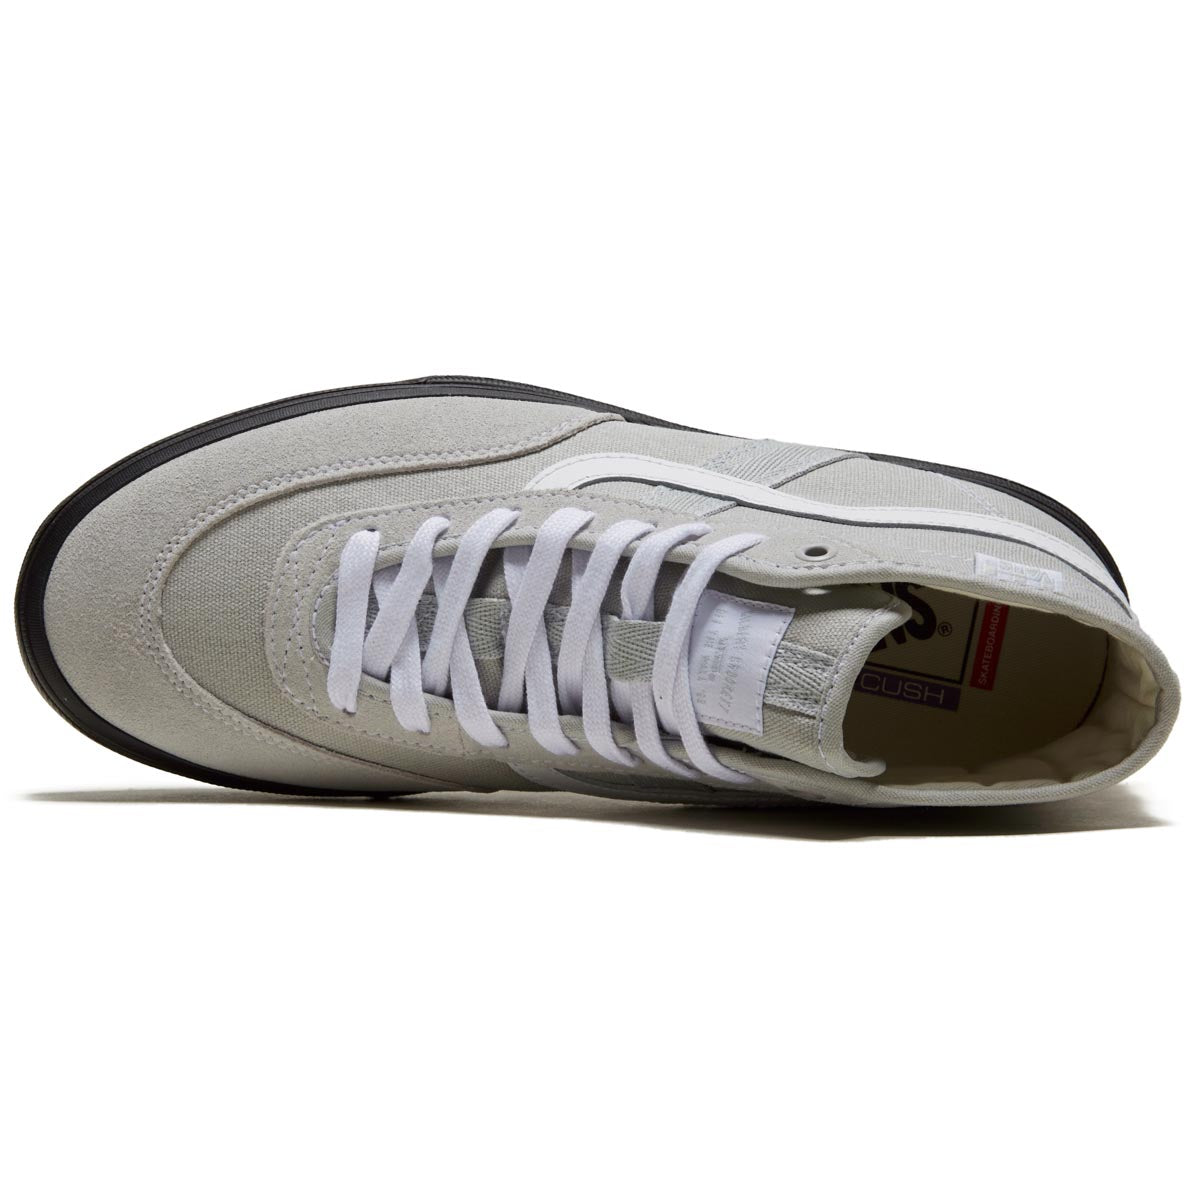 Vans Crockett High Shoes - Light Gray/Black image 3